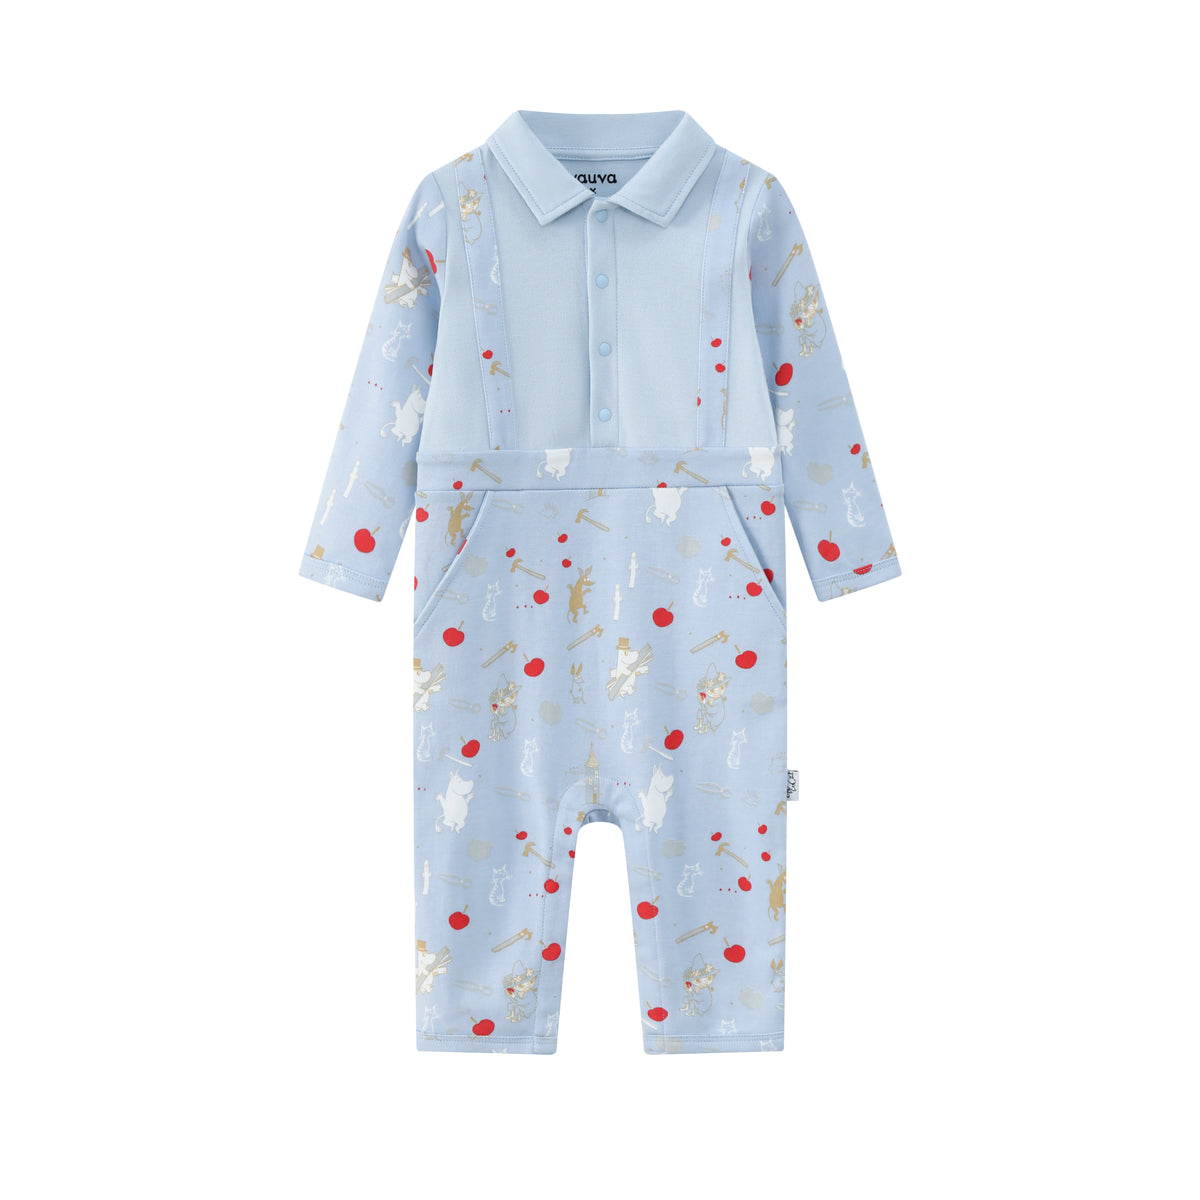 Vauva x Moomin FW23 - Baby Boys Moomin Semi-Print Cotton Long Sleeve Romper (Blue) product image front